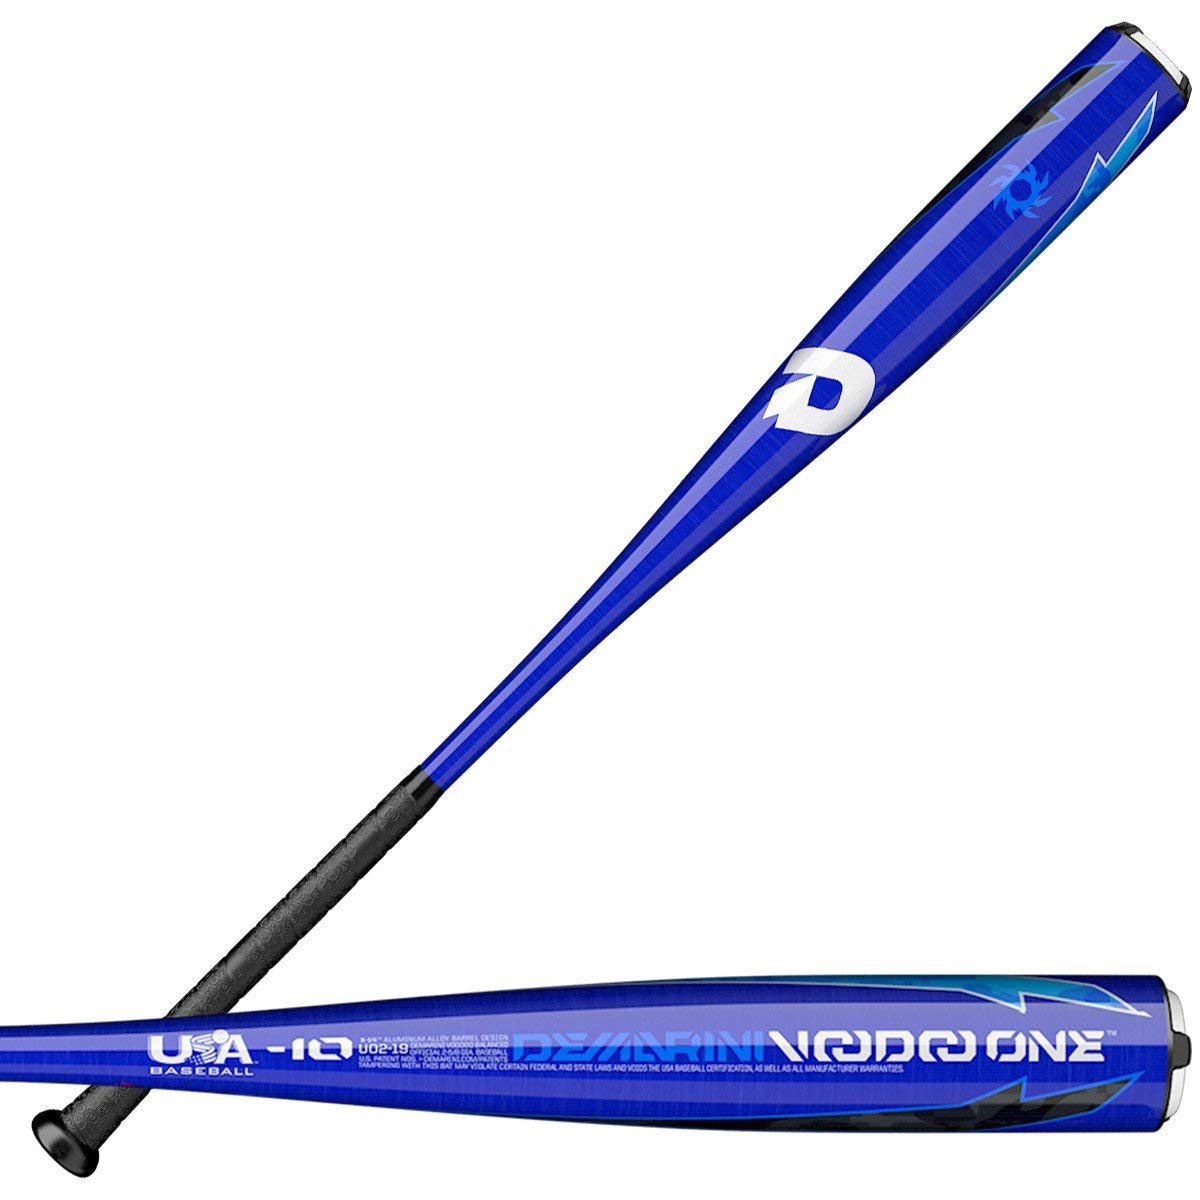 demarini-2019-voodoo-one-balanced-10-usa-baseball-bat-32-inch-22-oz WTDXUO22232-19 DeMarini 887768714888 `-10 Length to Weight Ratio Balanced Swing Weight One-Piece 100% X14